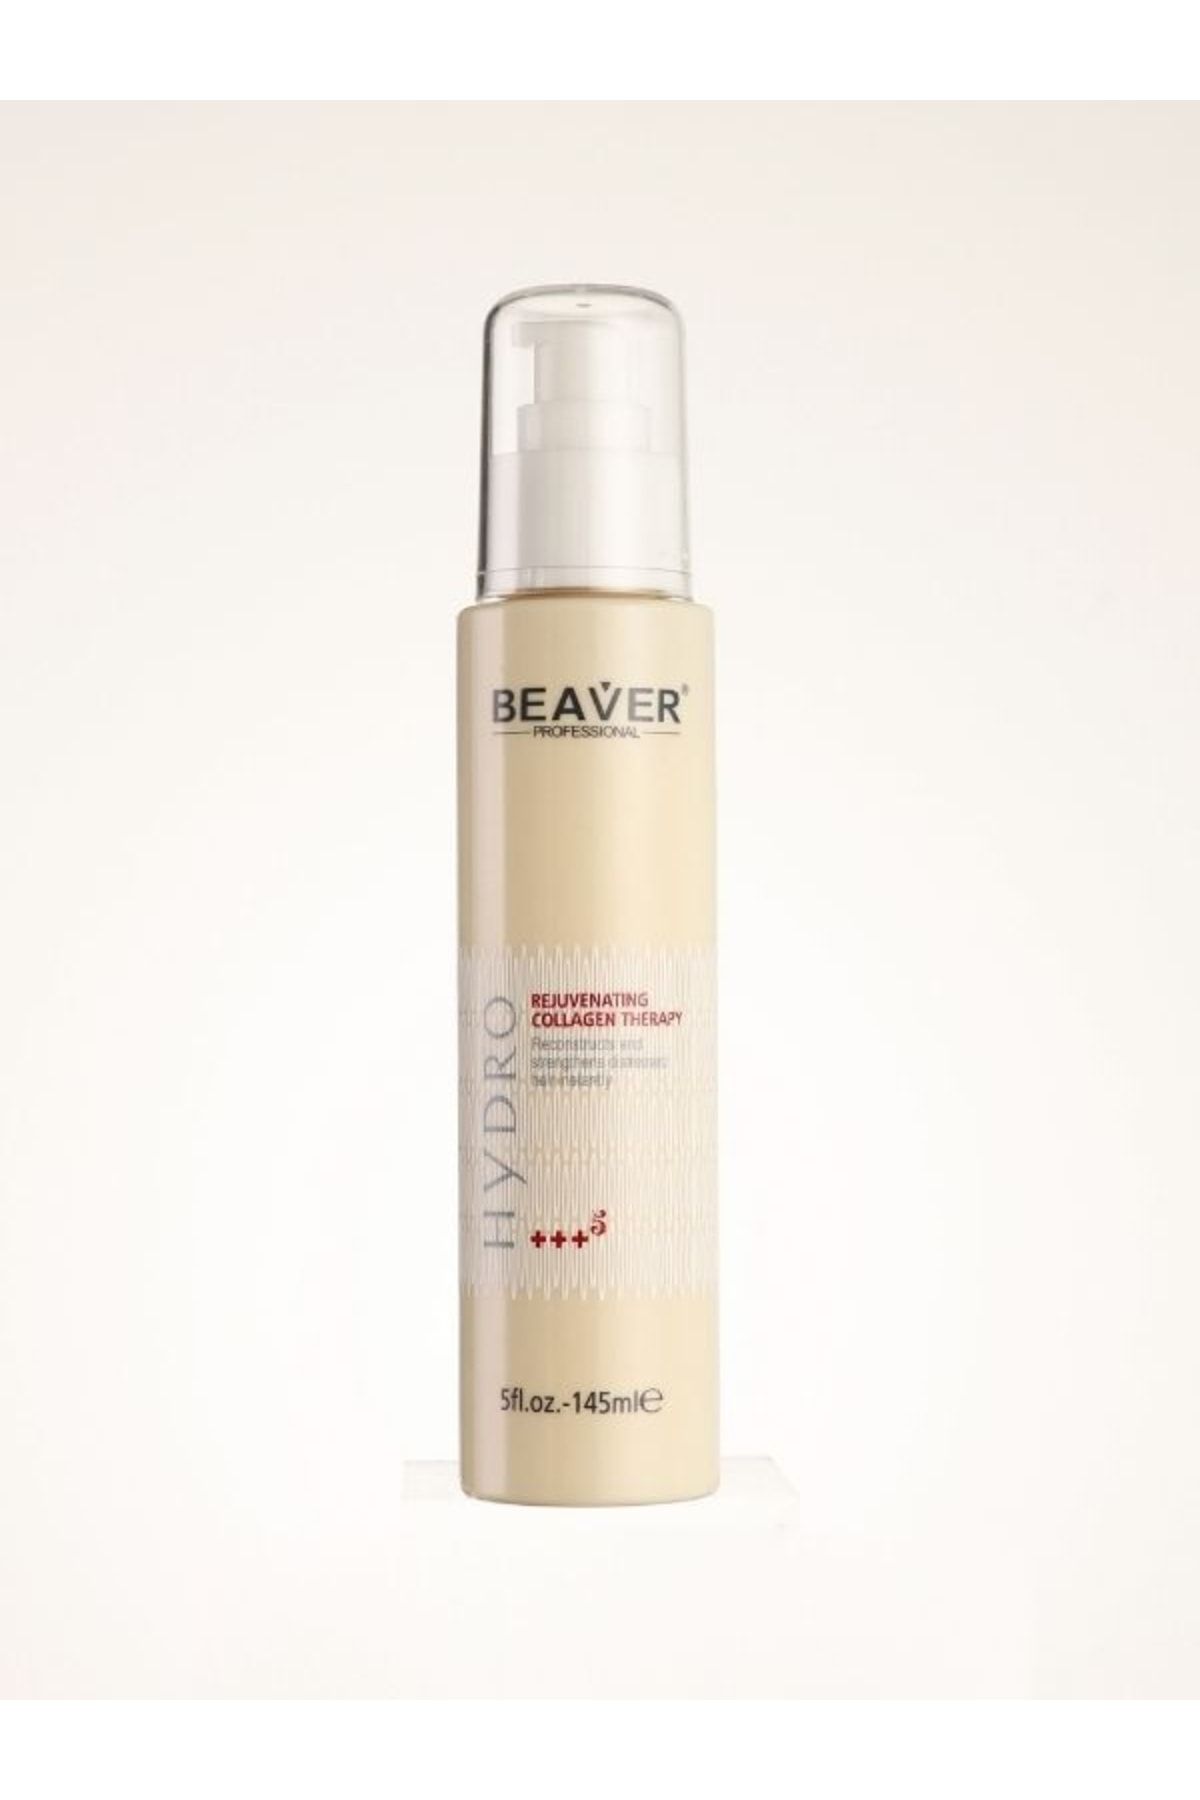 BEAVER PROFESSIONAL Beaver-rejuvenating Collagen Therapy-145 Ml RC-01